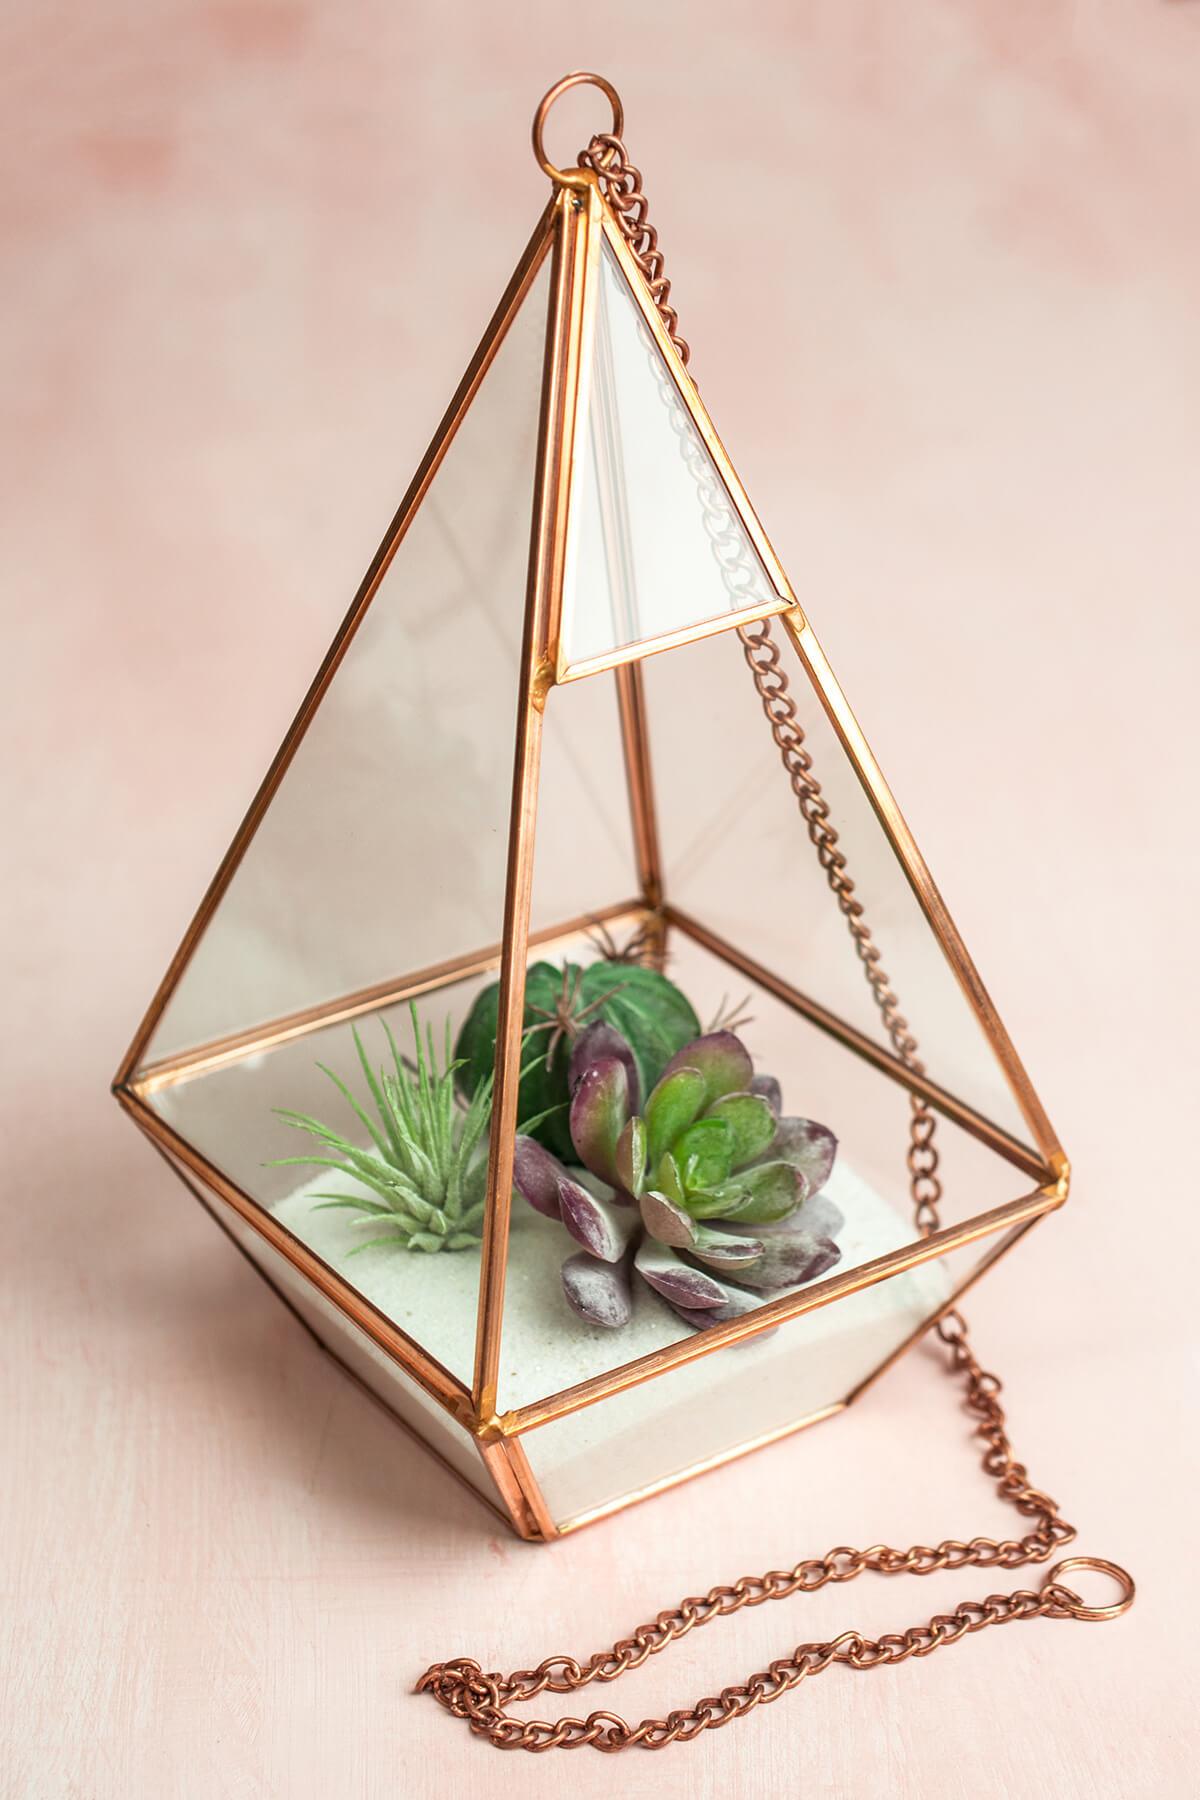 Copper Hanging 9" Hexagonal Based Glass & Metal Terrarium